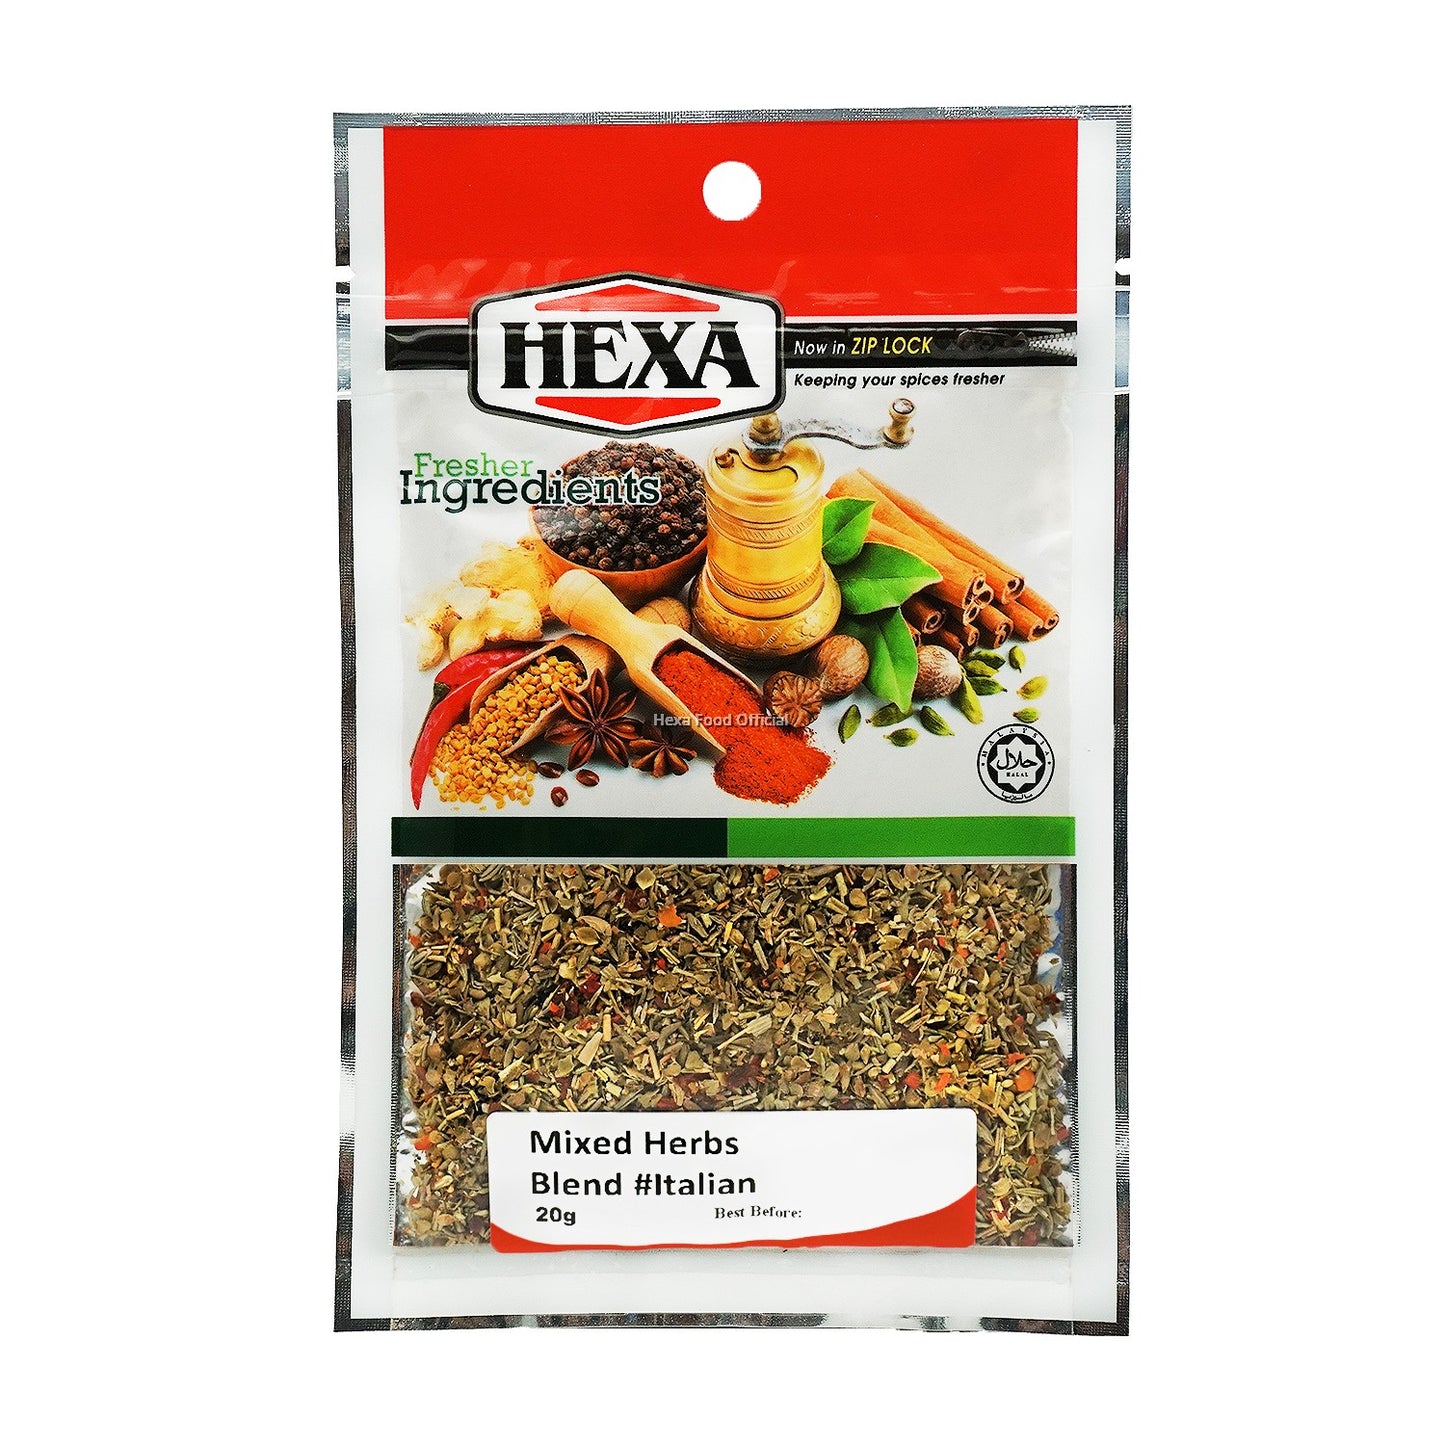 Nachos Set HEXA HALAL Cheese Sauce Premix 200gm + Paprika Powder 30gm+ Italian Mixed Herbs 20gm"